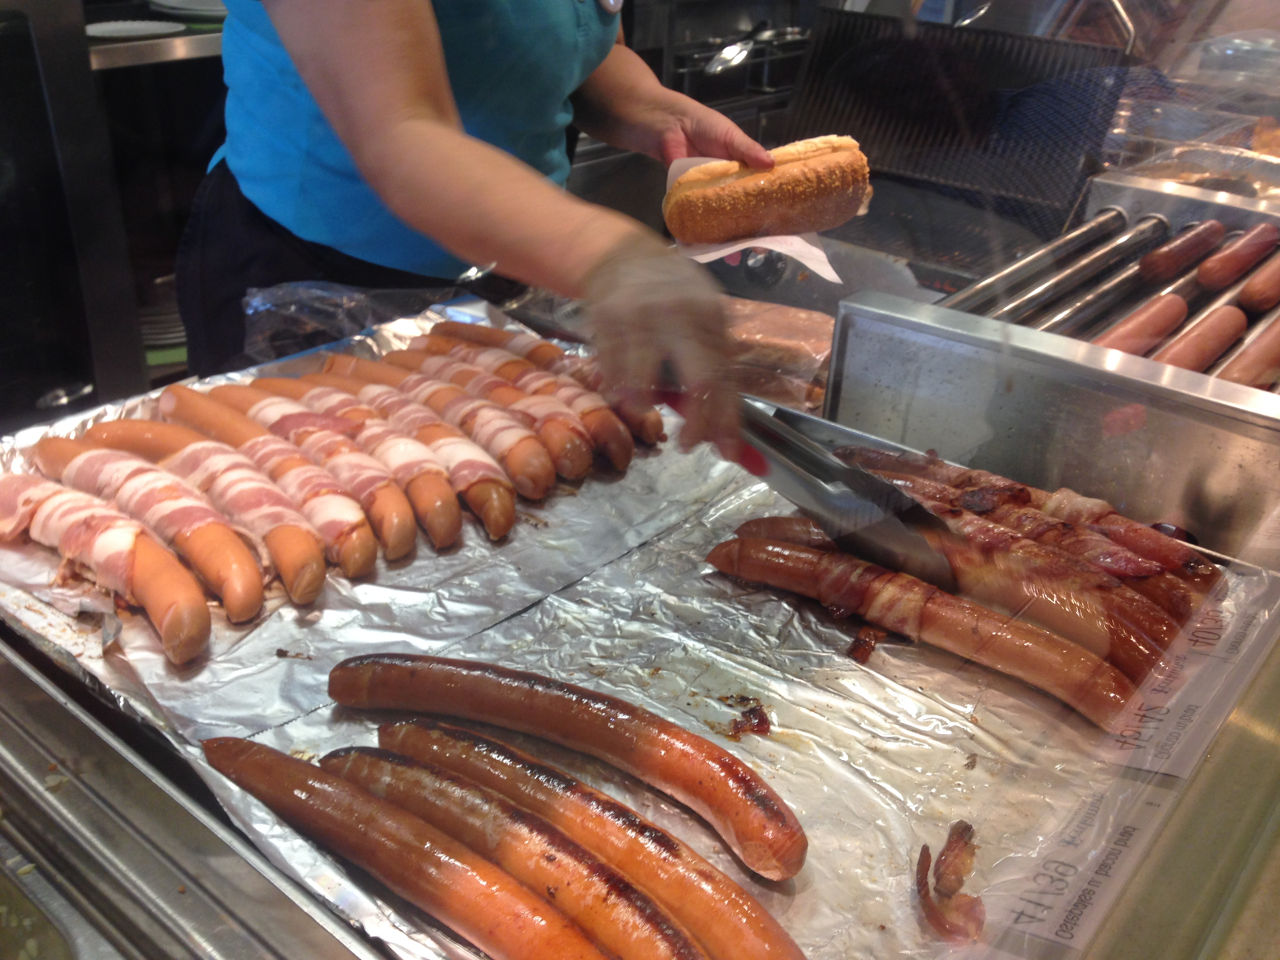 Norwegian hotdogs